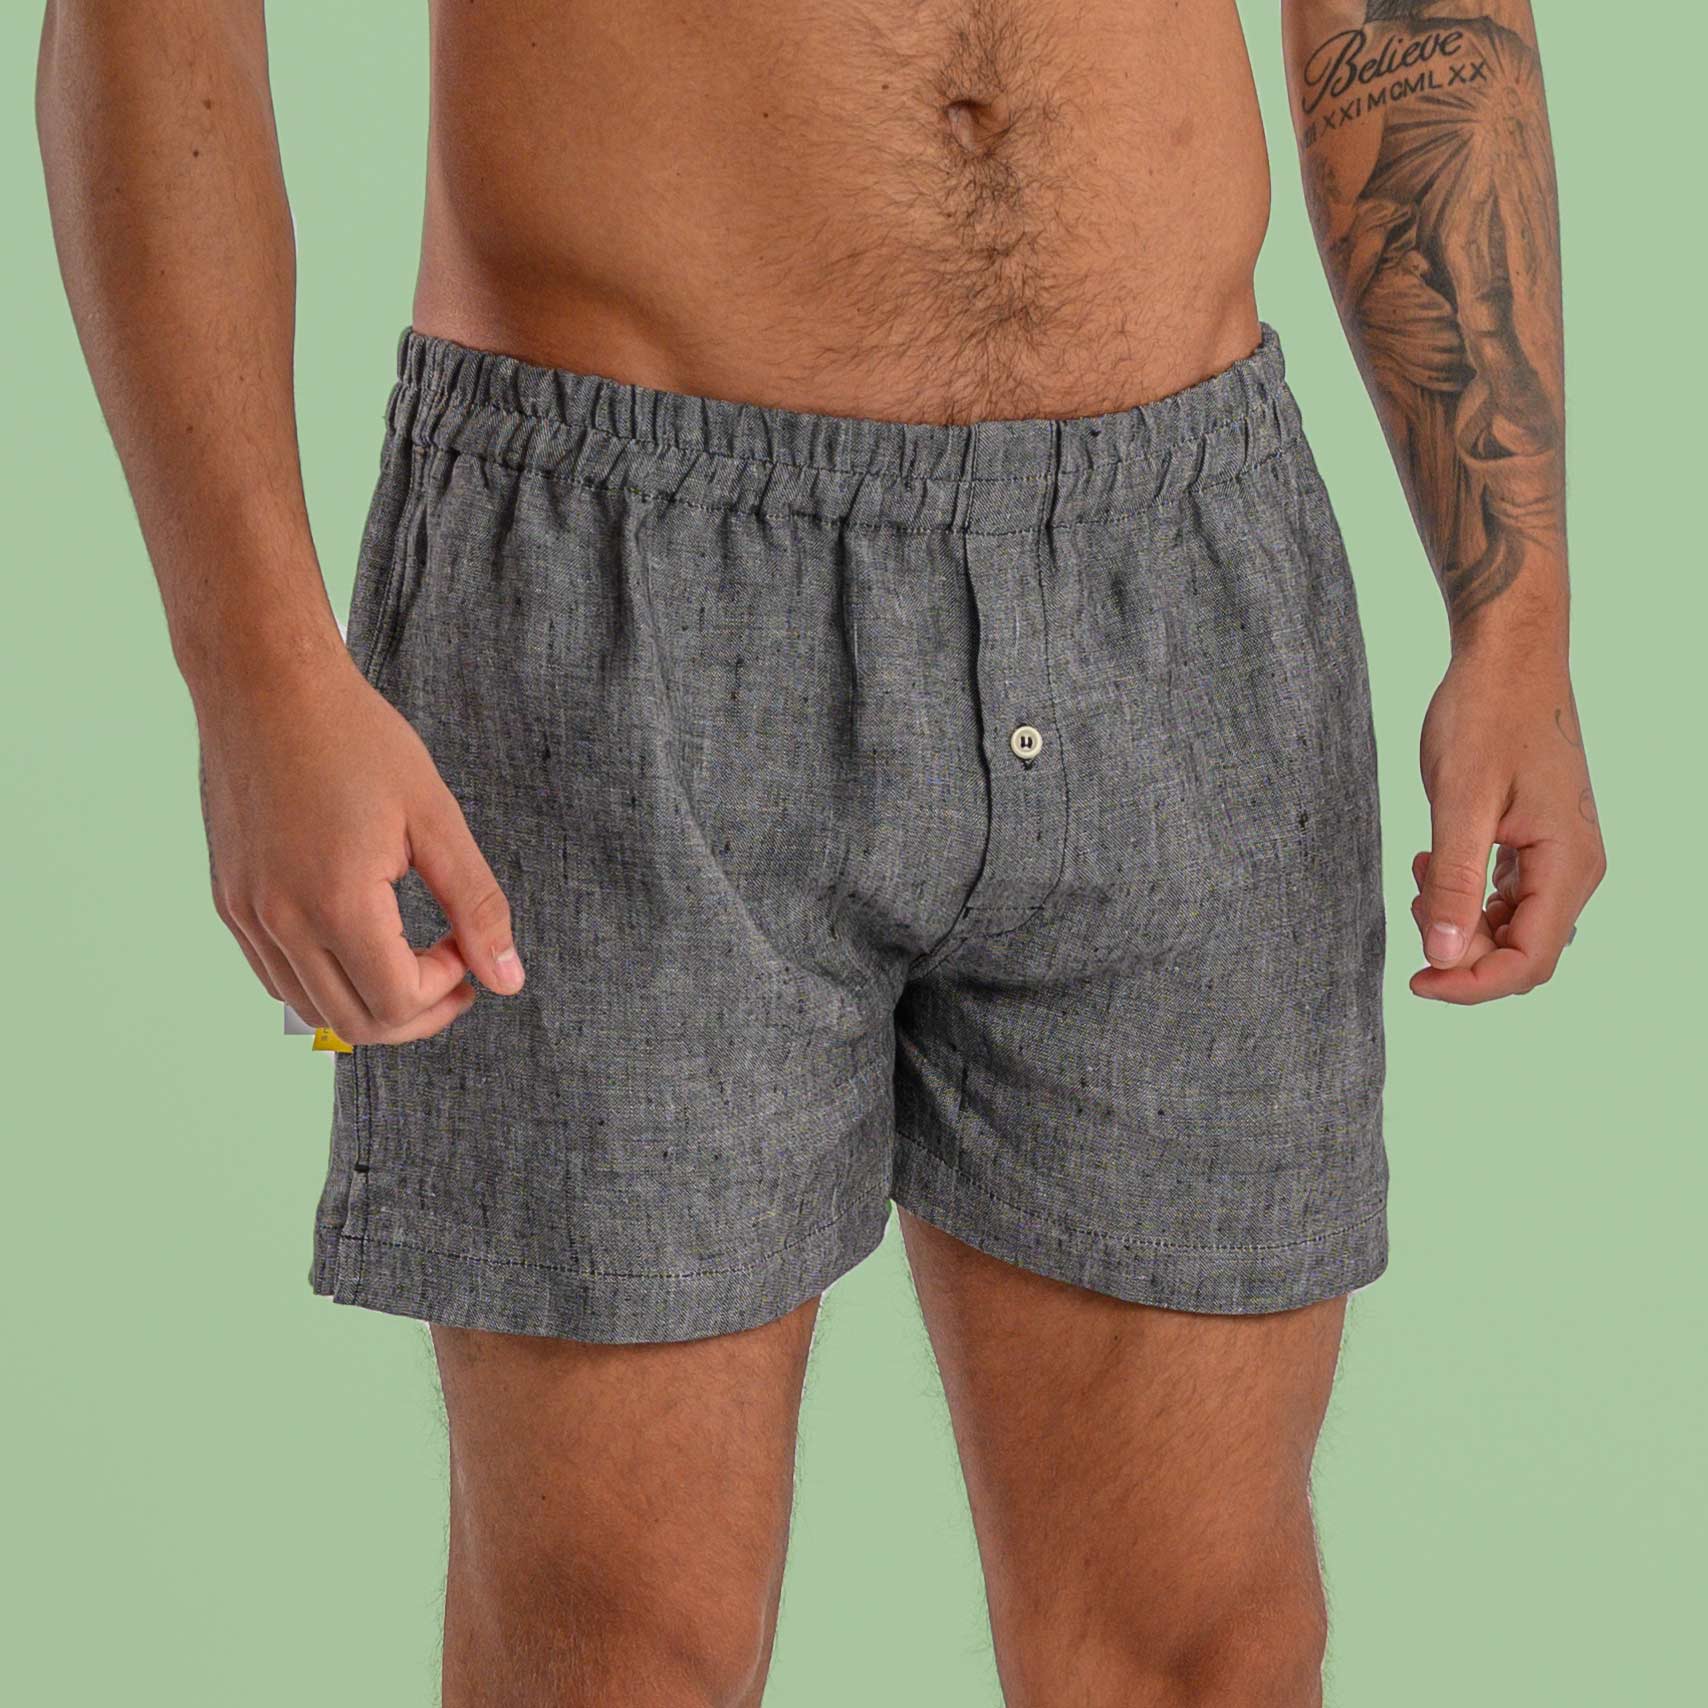 %100 Merino Wool Men's Classic Light Weight Extra Large Pants Underwear